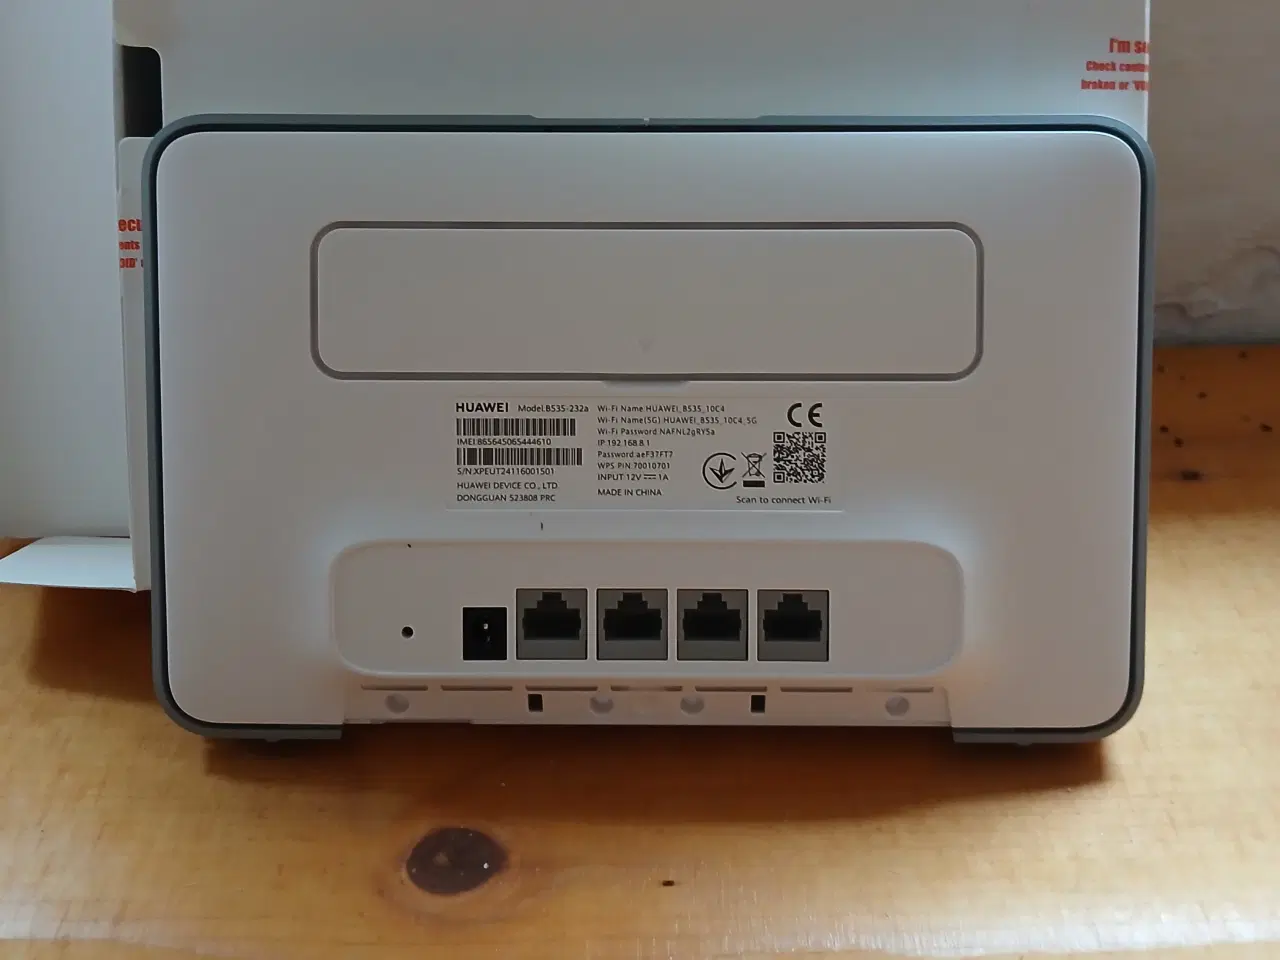 Billede 3 - Huawei B535 router